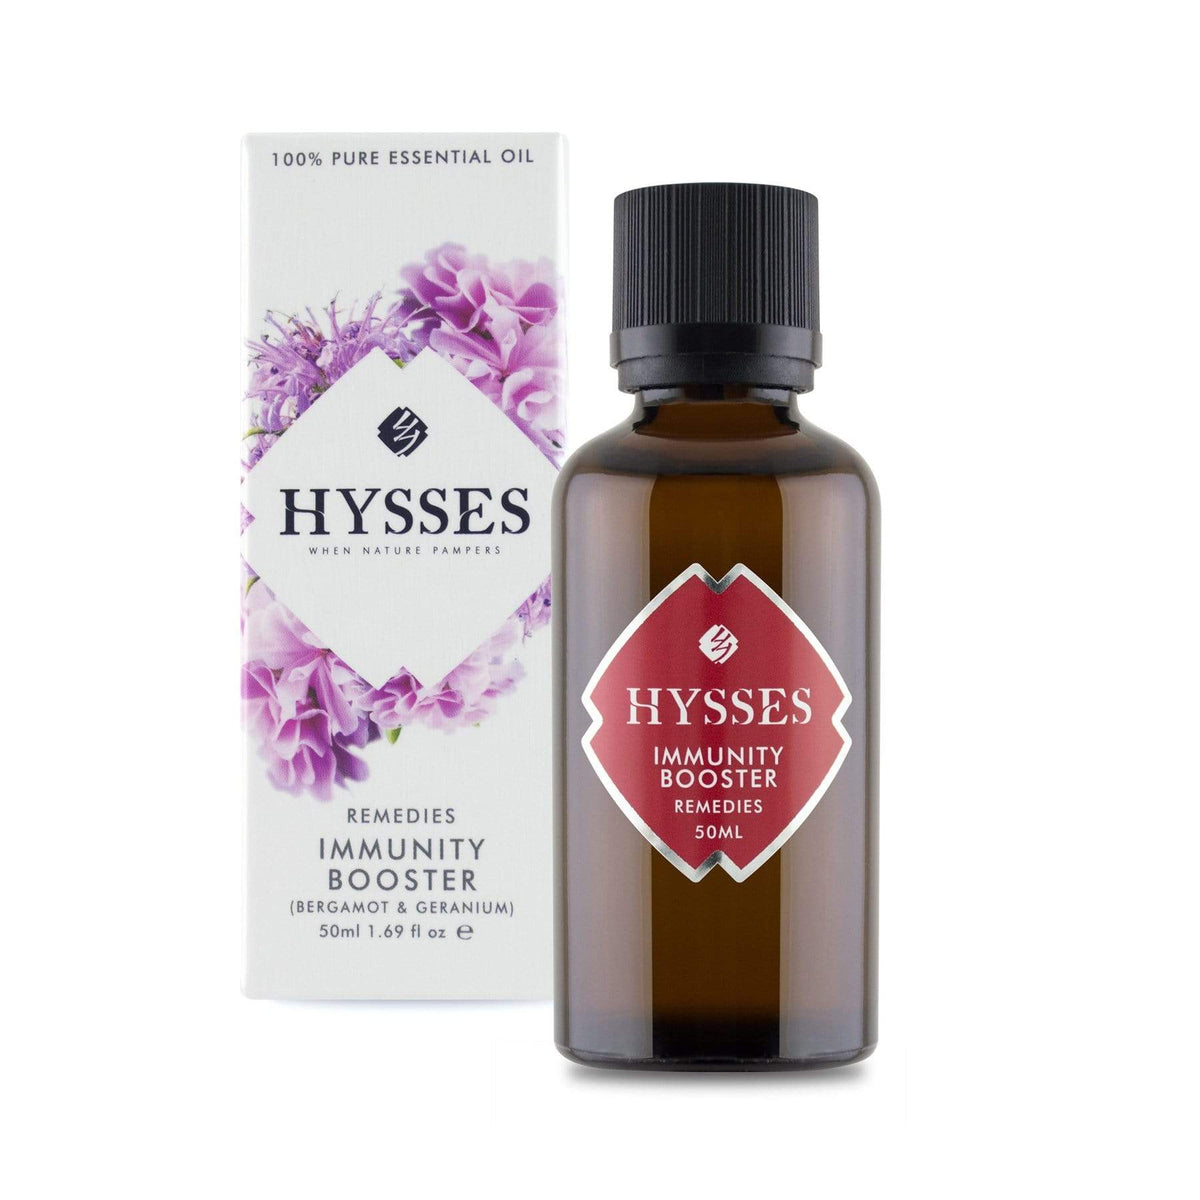 Hysses Essential Oil 50ml Remedies, Immunity Booster